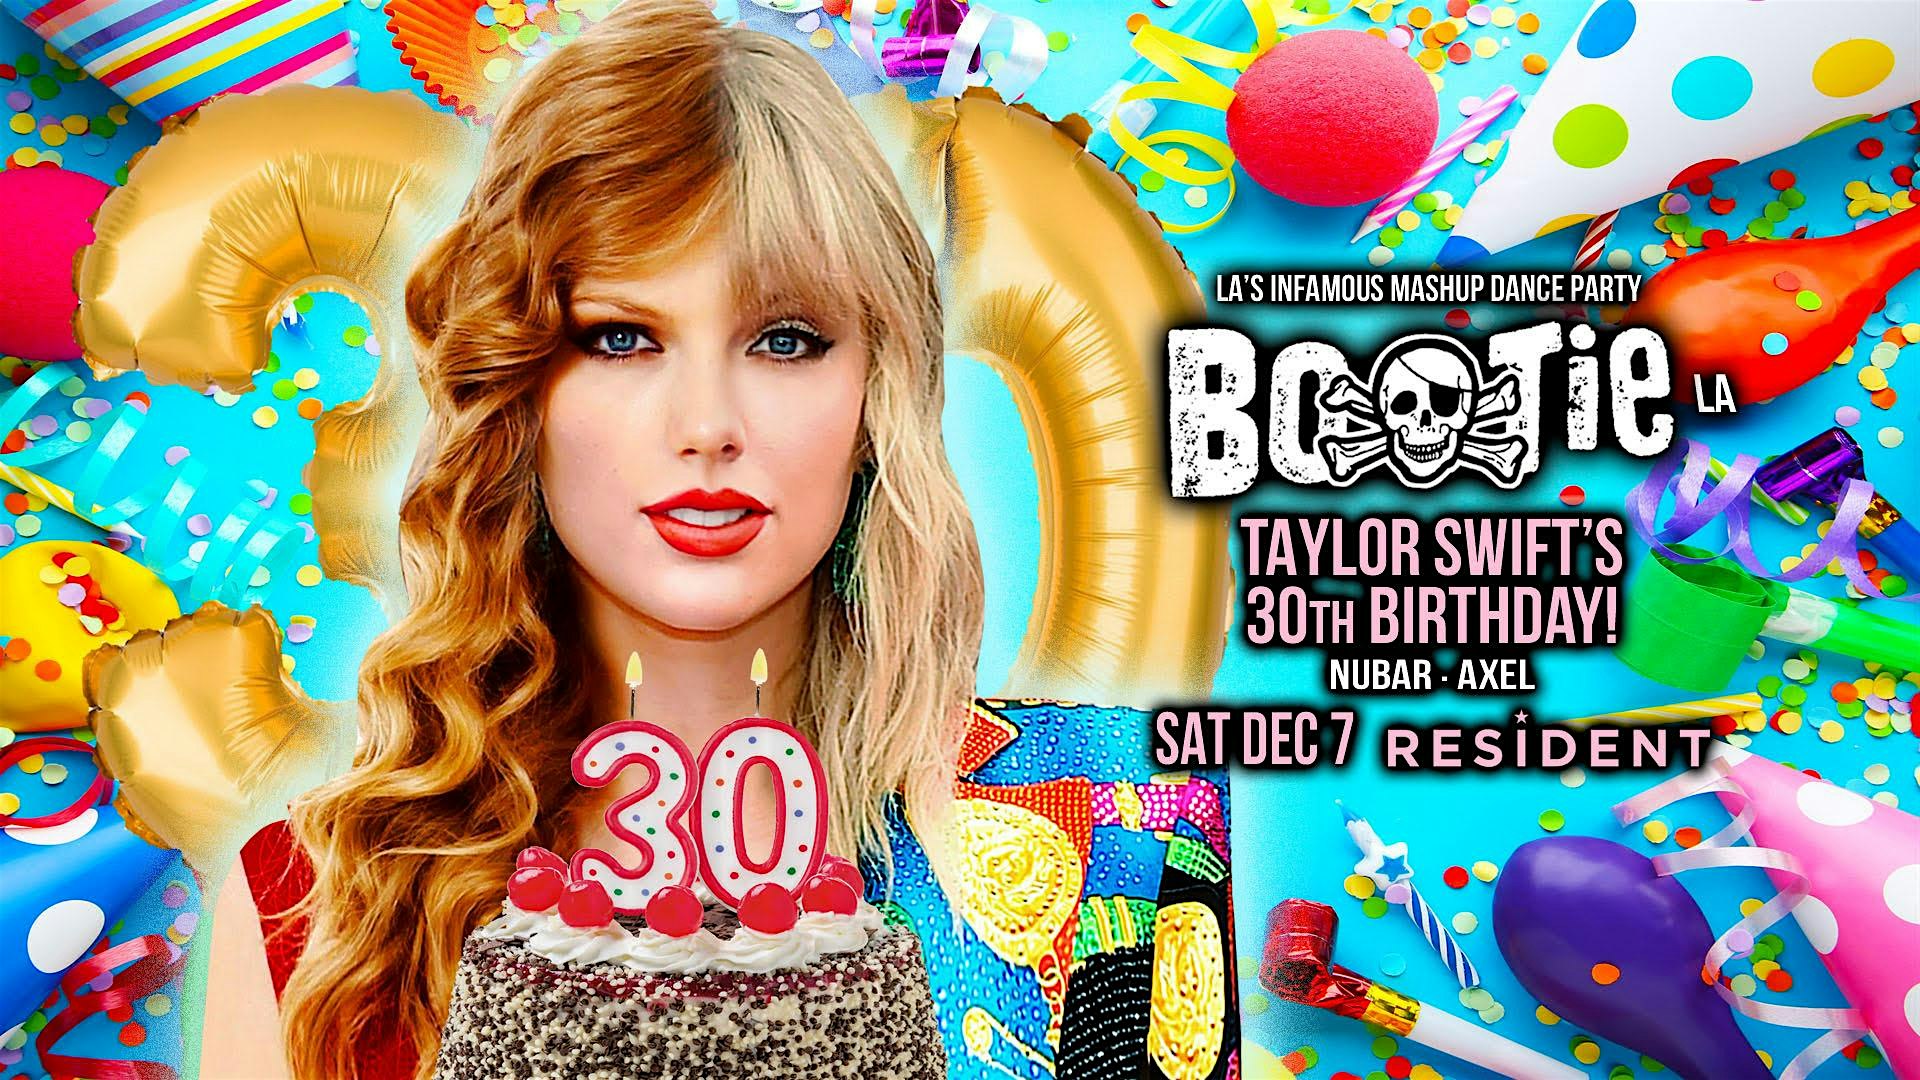 BOOTIE LA: Taylor Swift’s 30th Birthday!